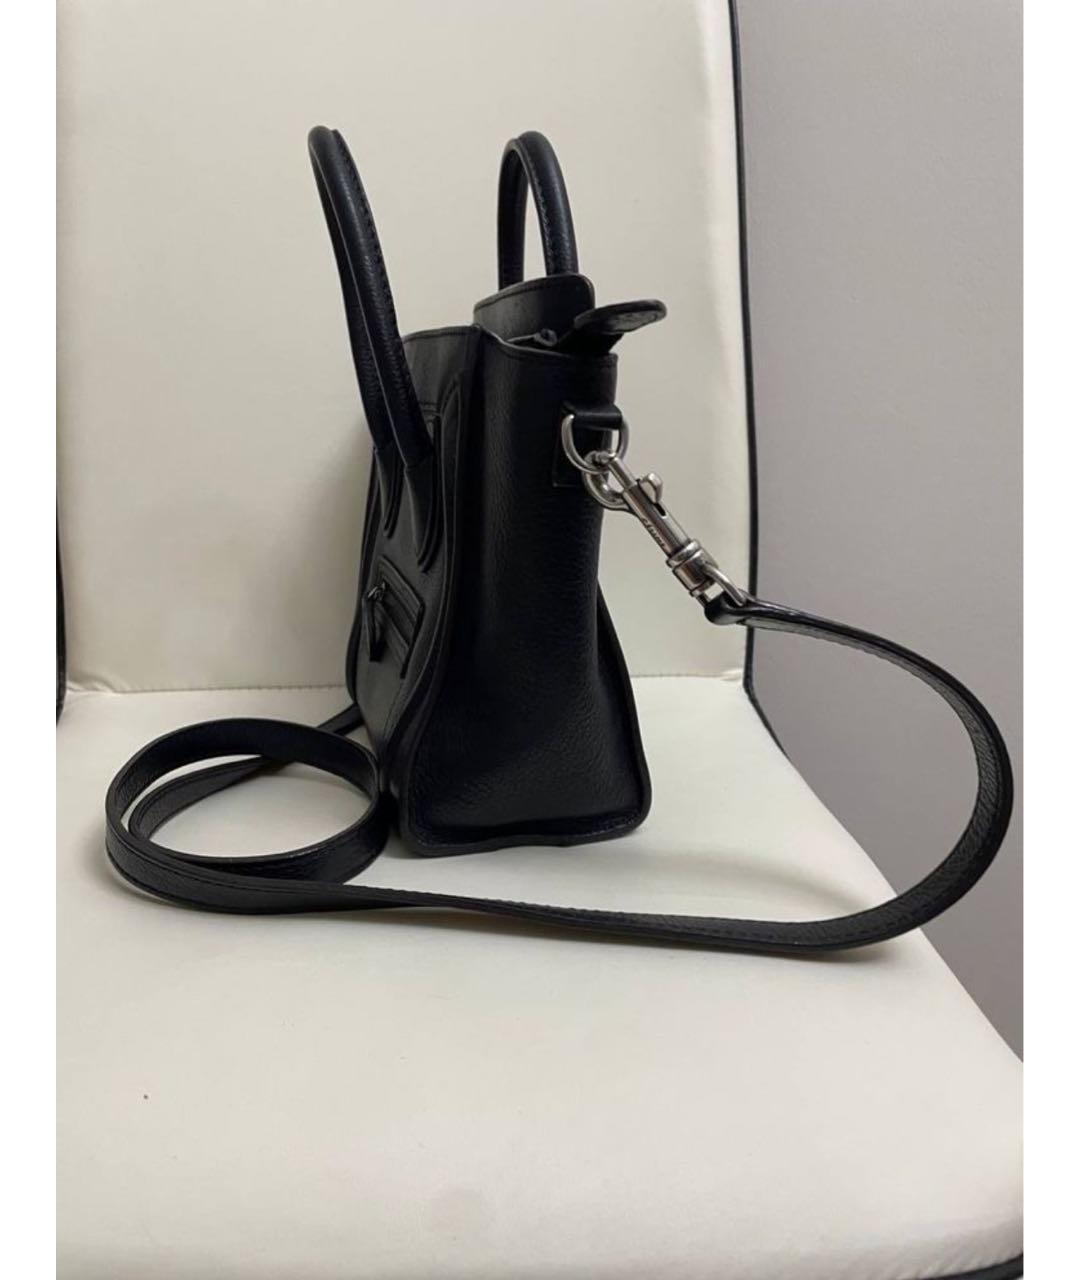 CELINE PRE-OWNED Черная кожаная сумка с короткими ручками, фото 2